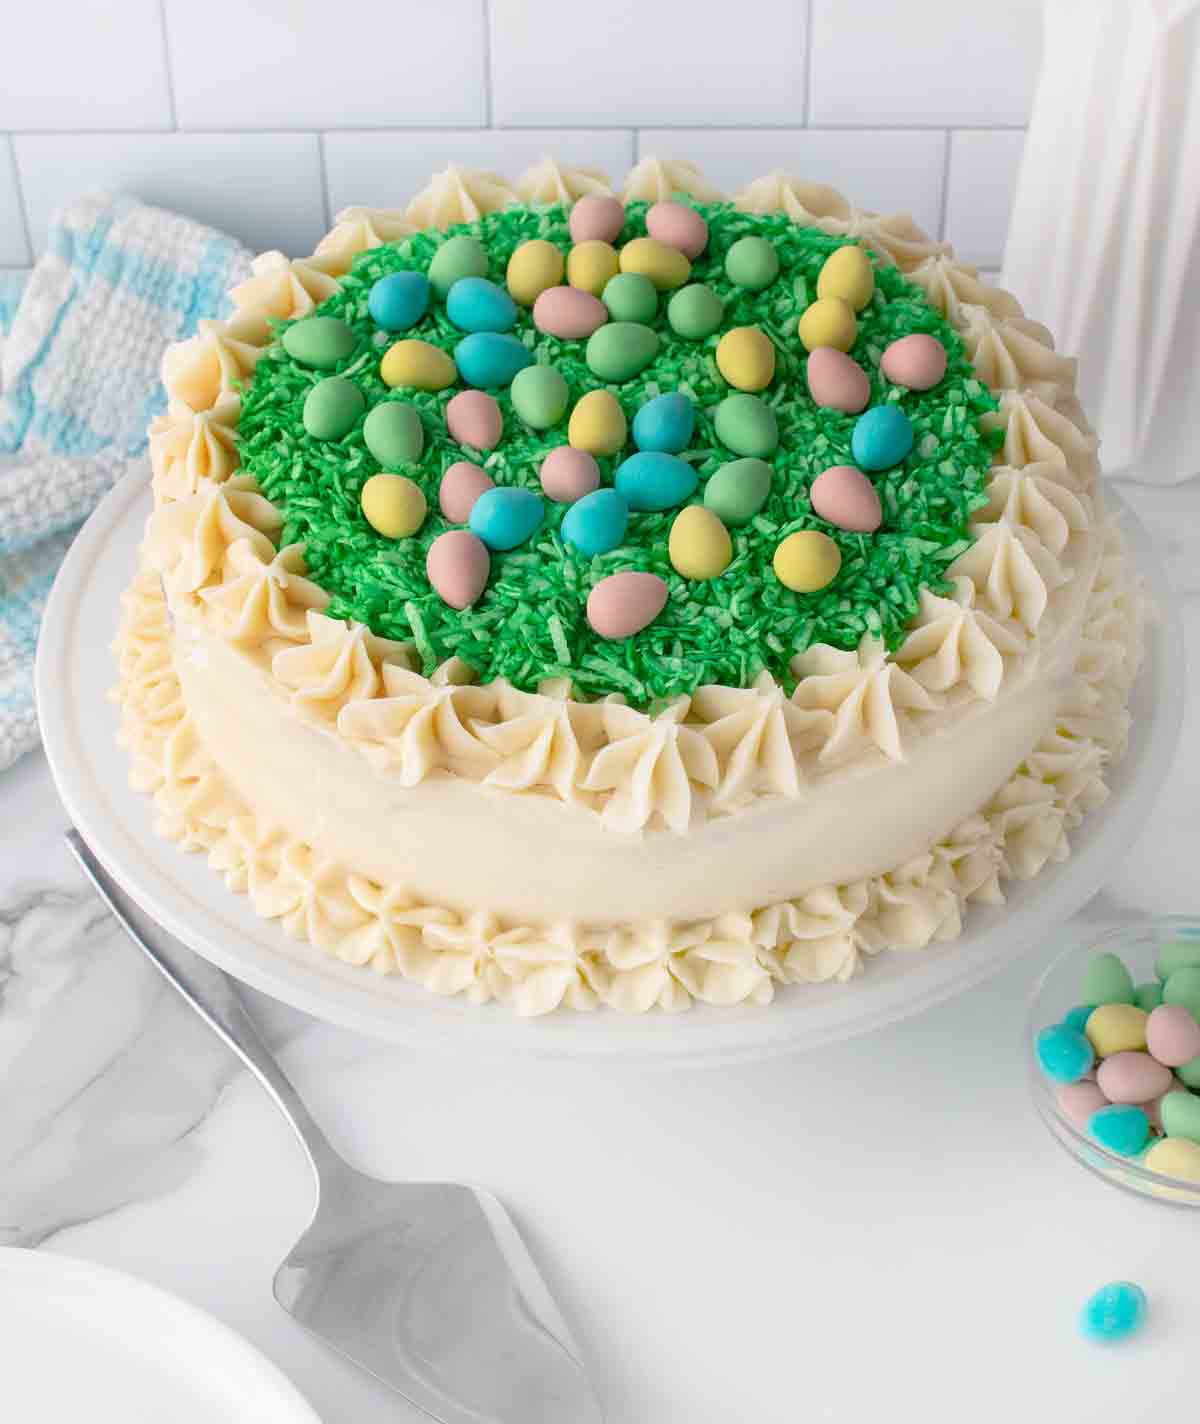 III. Creative Easter Cake Decorations